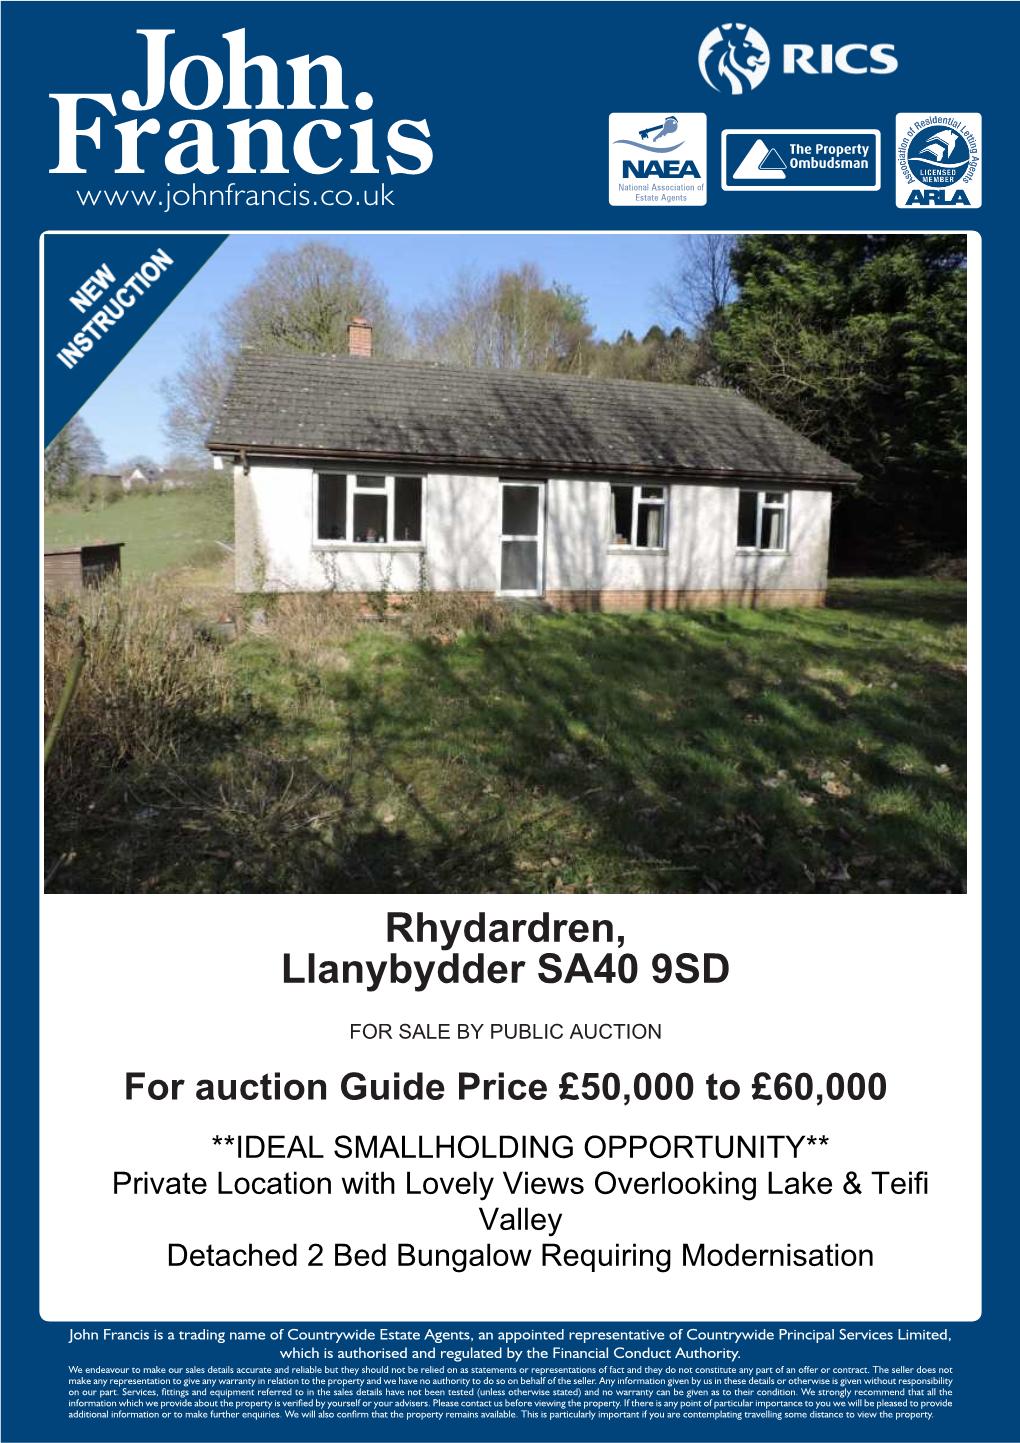 Rhydardren, Llanybydder SA40 9SD